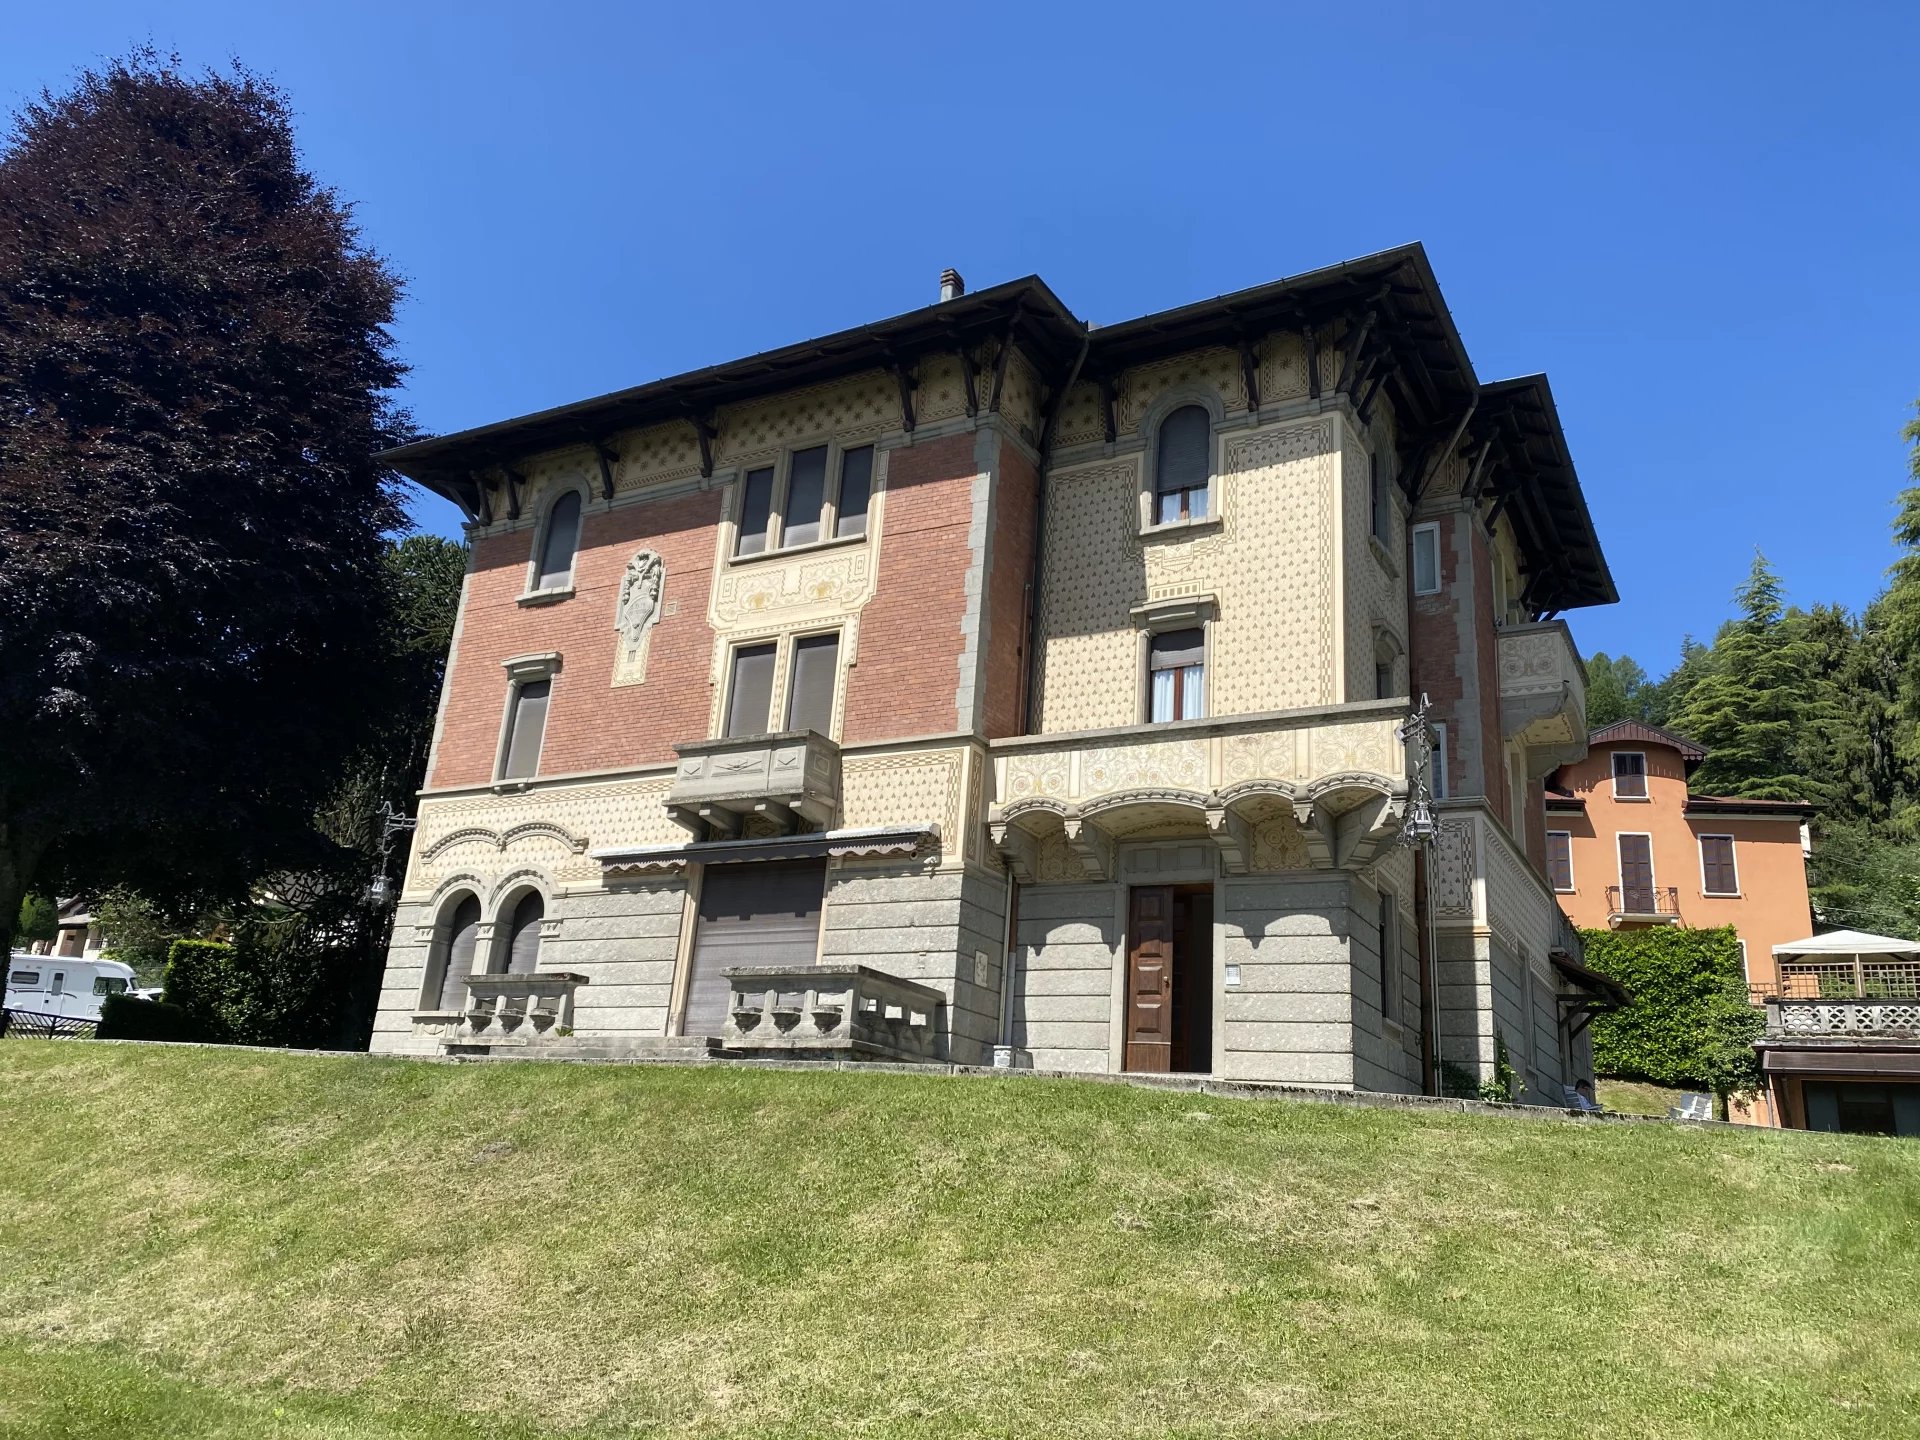 Sale Apartment - Alta Valle Intelvi - Italy